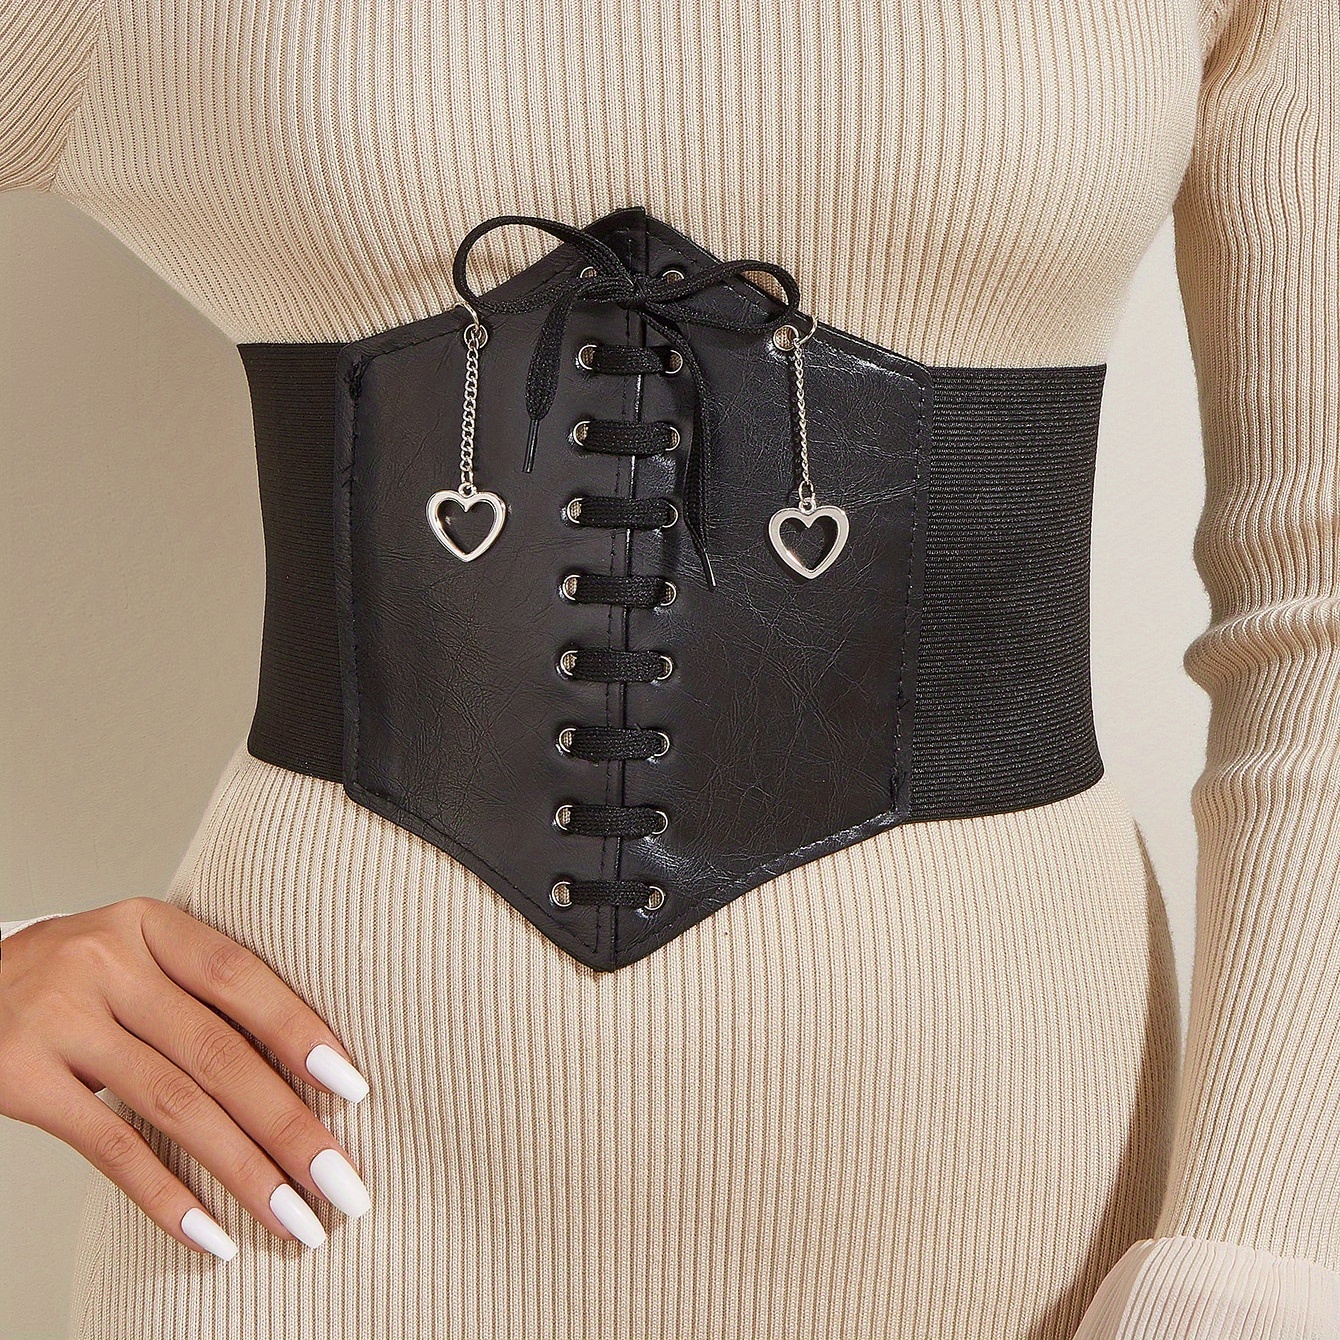 Shop Generic 2x Women Lace Waist Belt Elastic Skirt Dress Girdle Wedding  Black+ Online